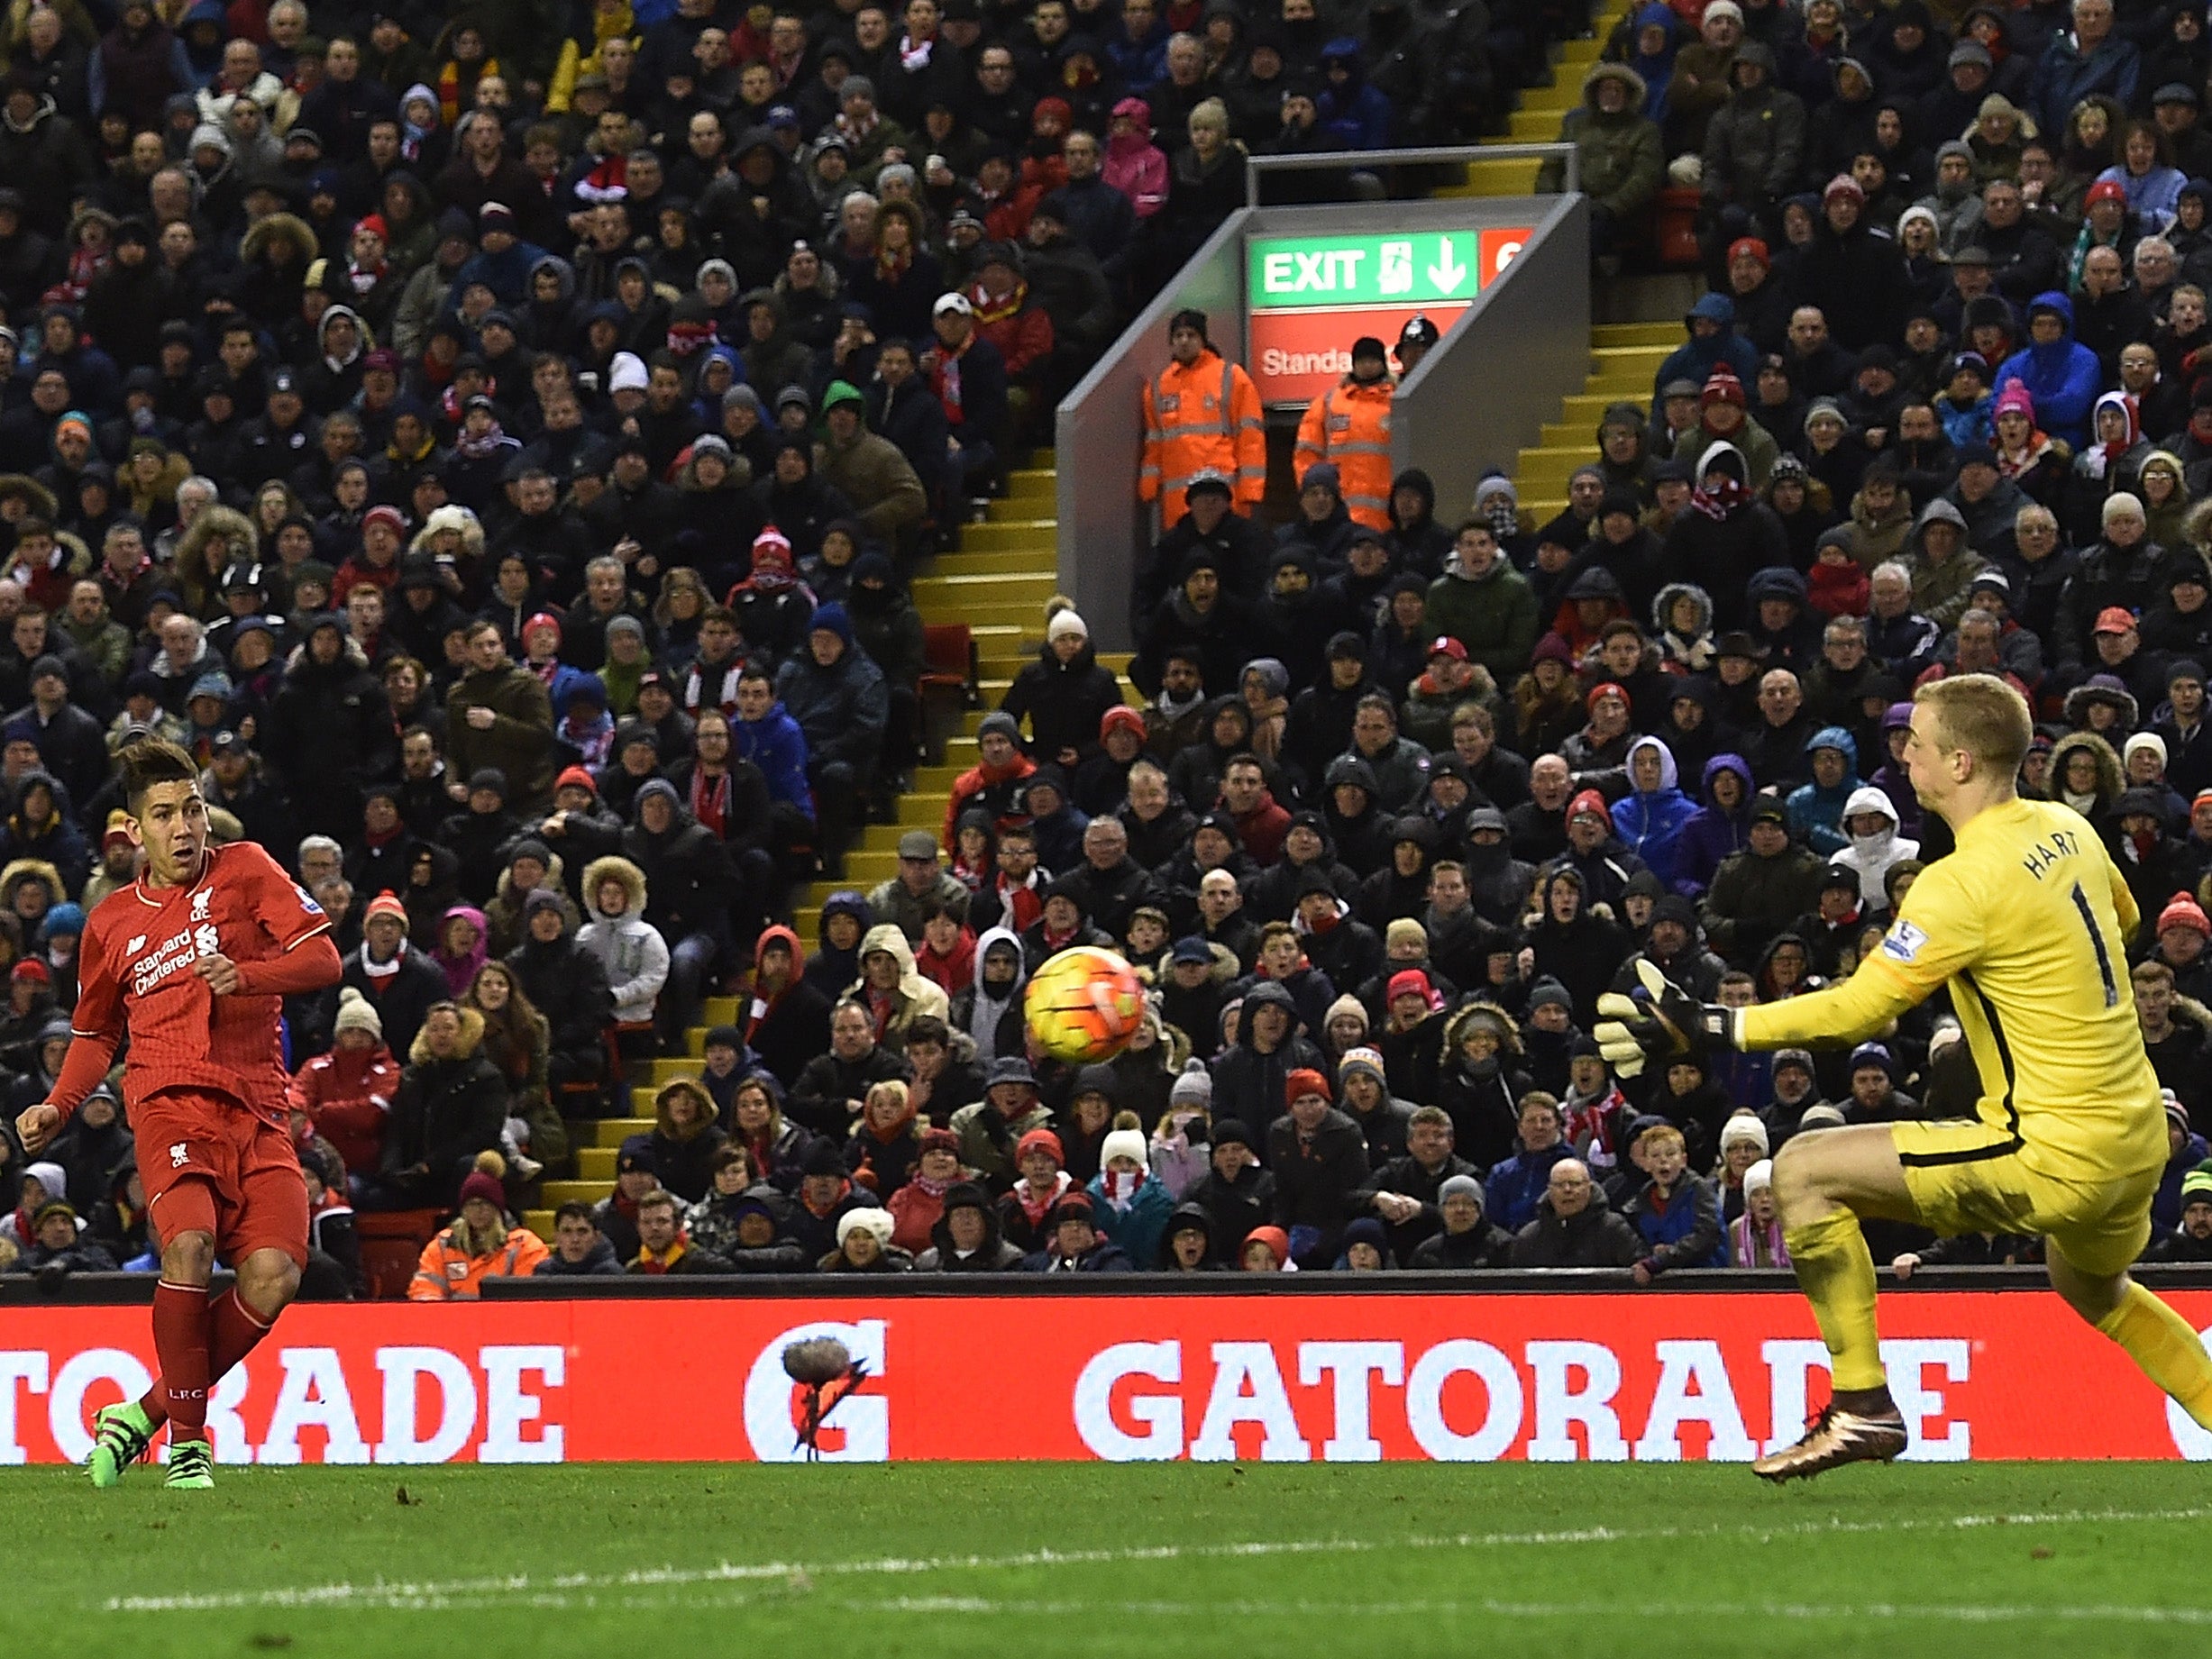 Roberto Firmino curls it around Manchester City goalkeeper Joe Hart